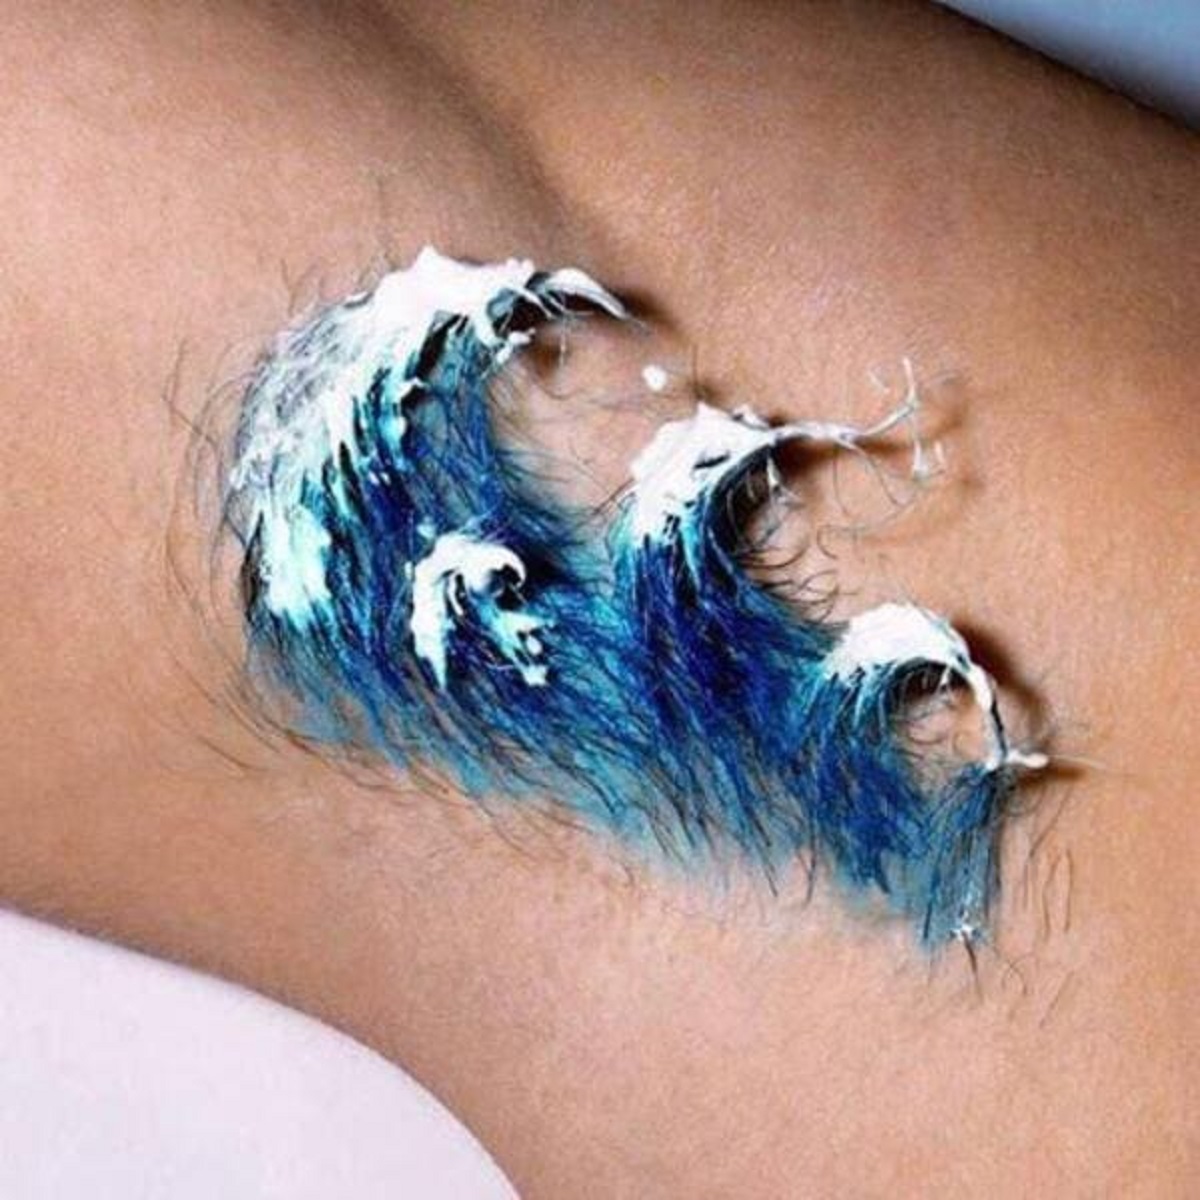 “The Great Wave off Kanagawa on body hair”